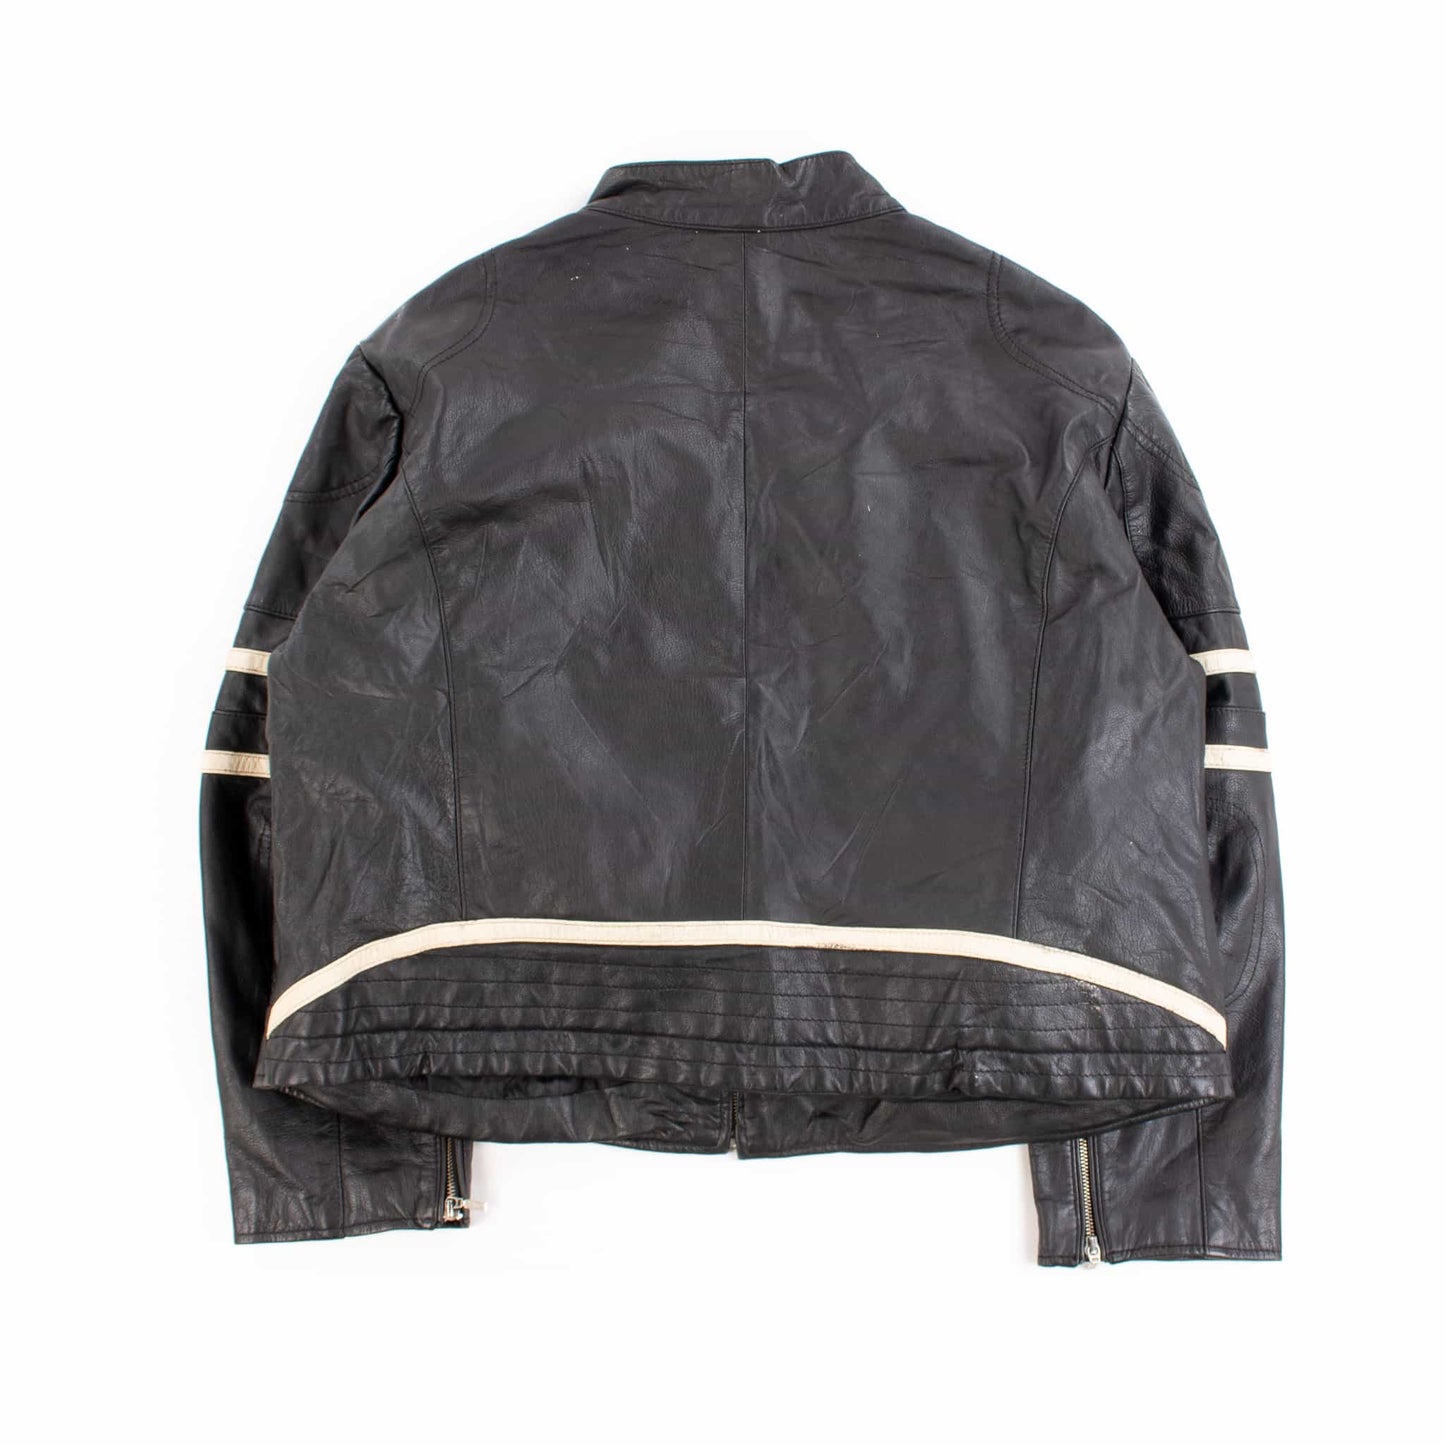 Vintage Leather 'Arma' Jacket - American Madness